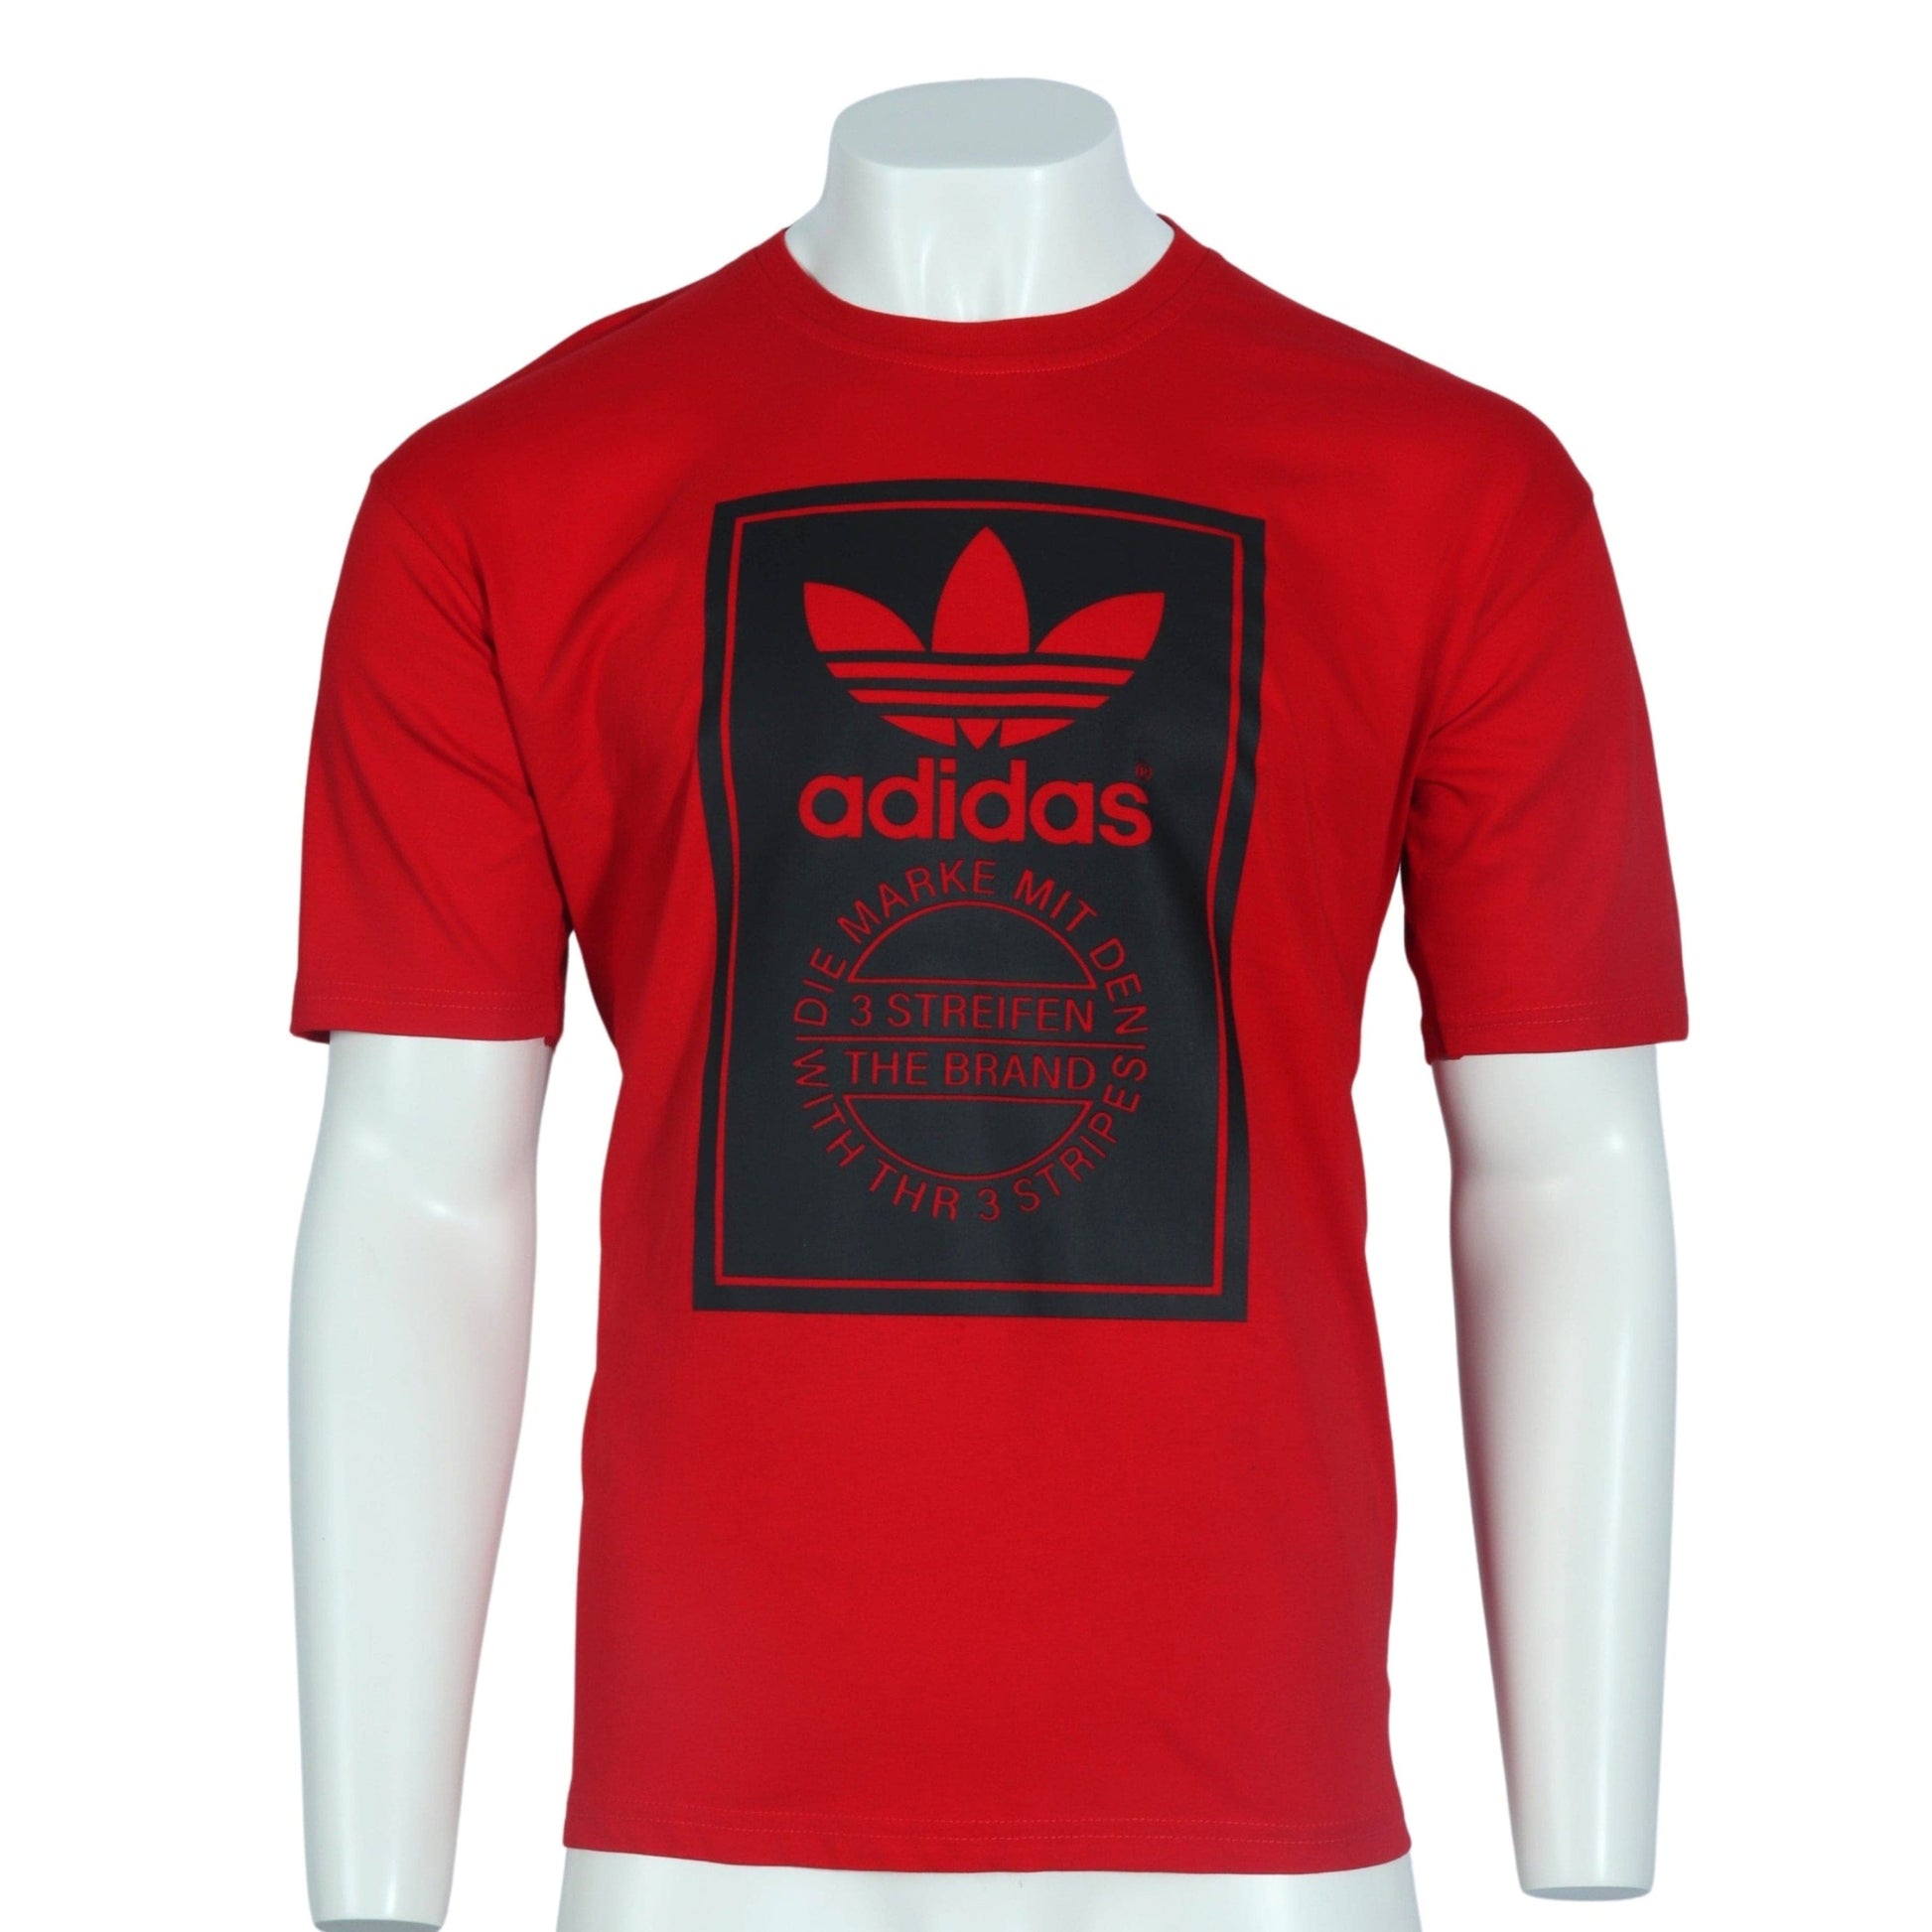 ADIDAS Mens Tops M / Red ADIDAS - Short Sleeve T-shirt